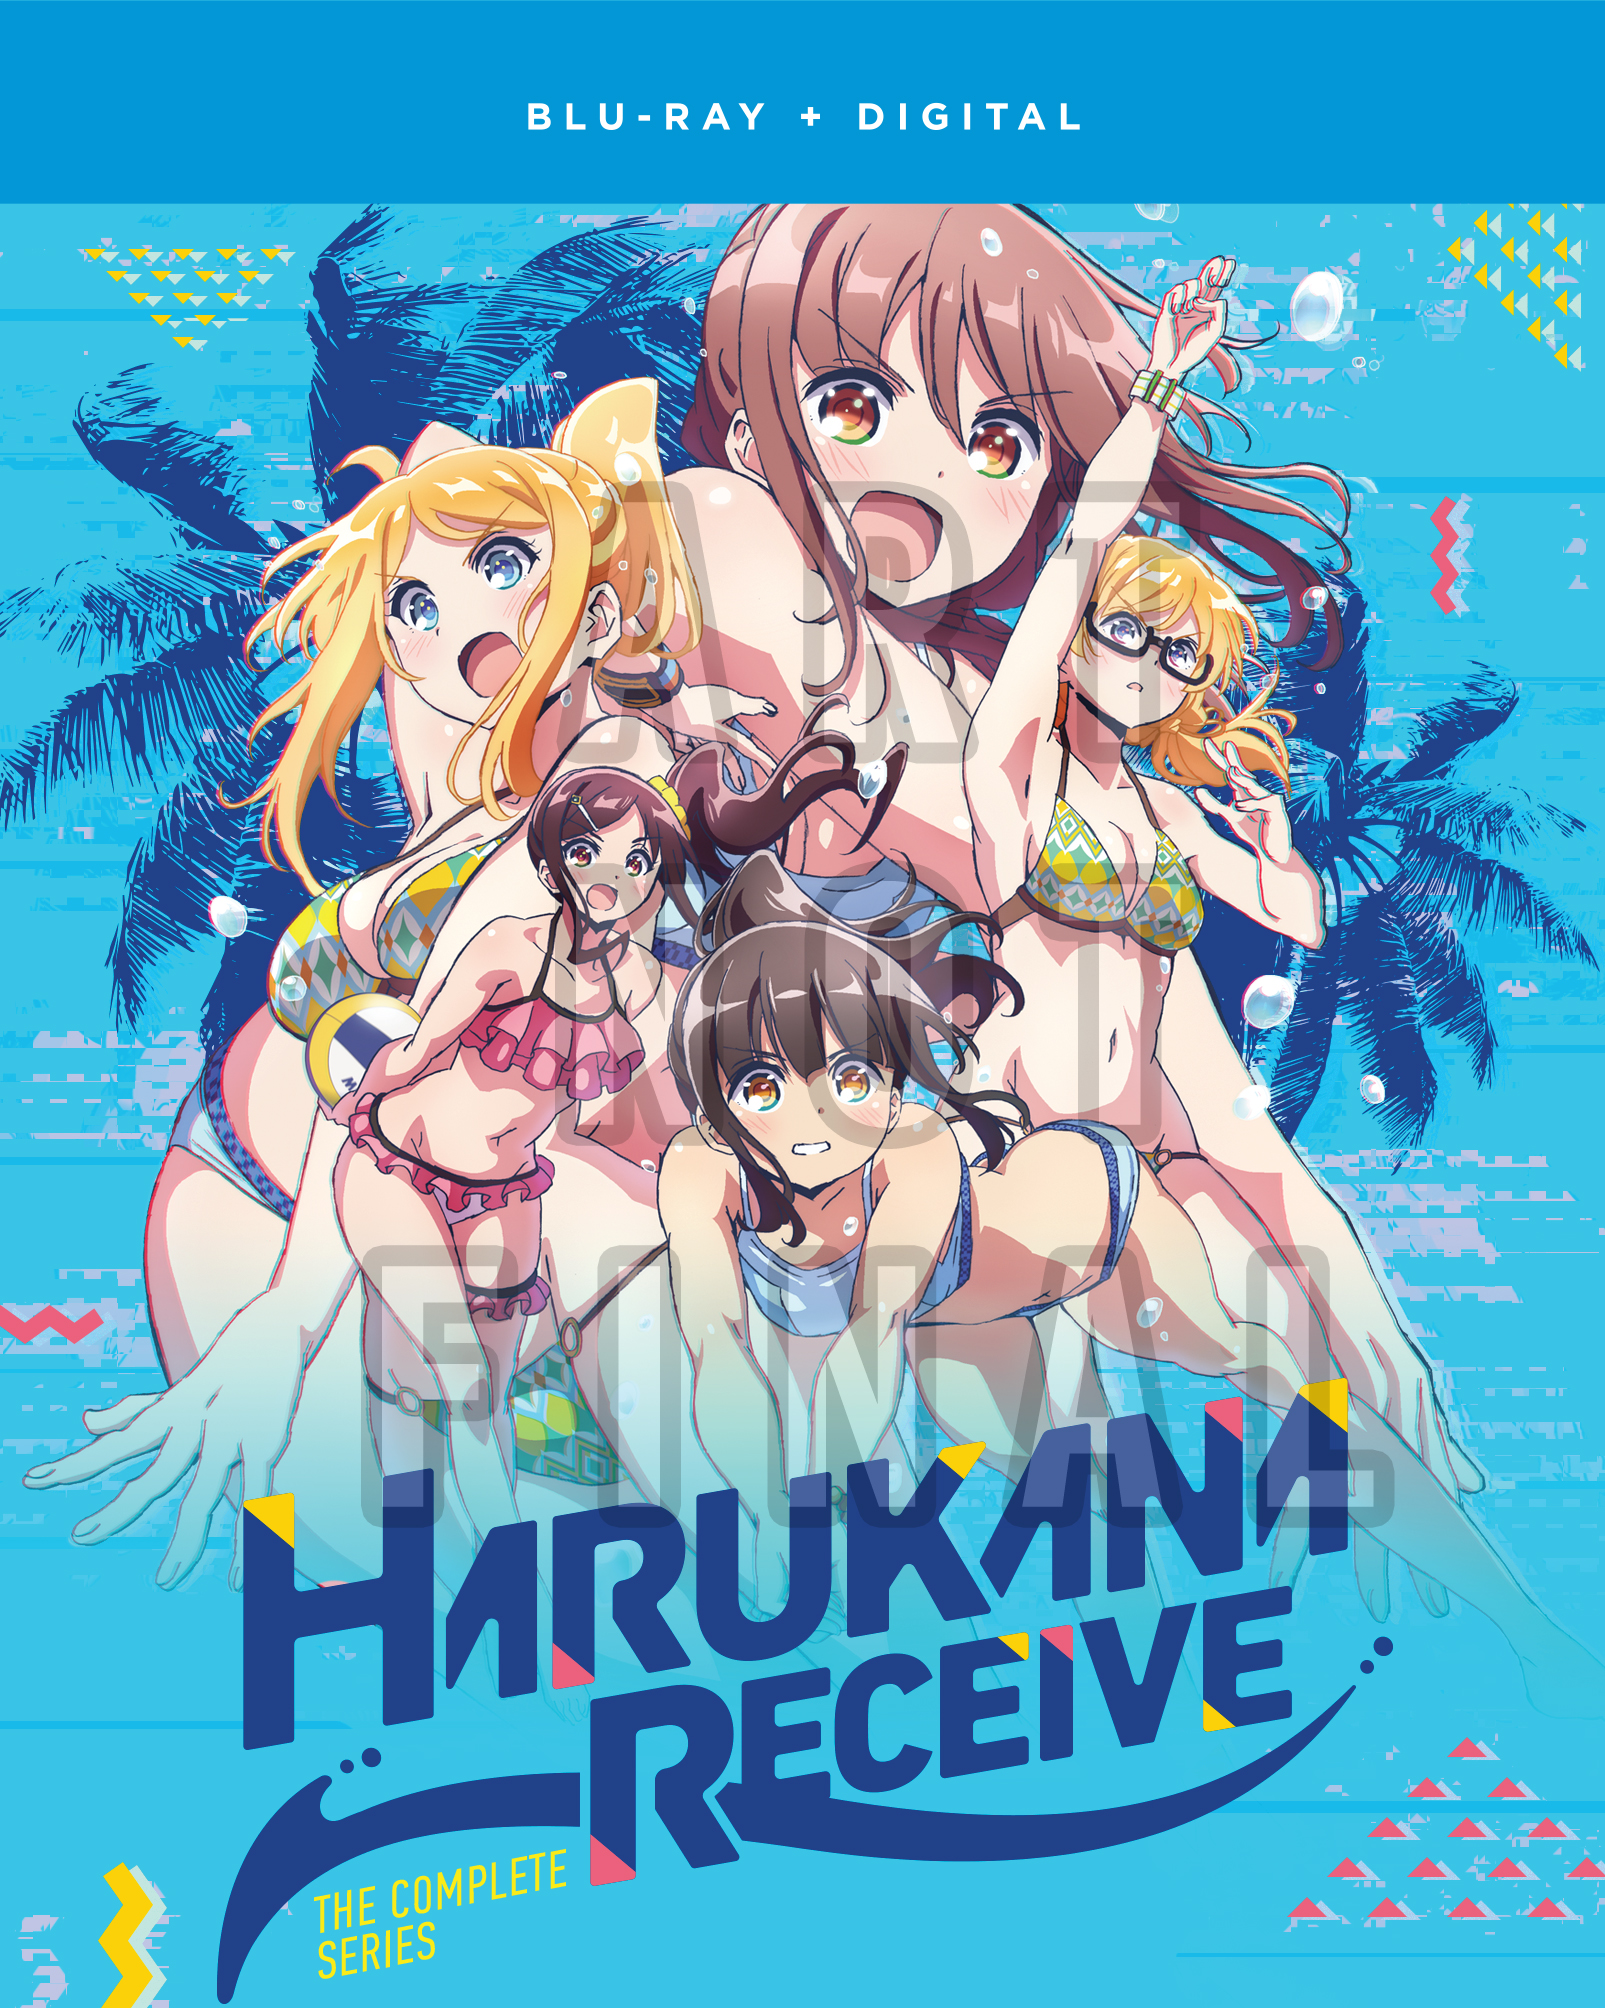 Harukana Receive [Review]